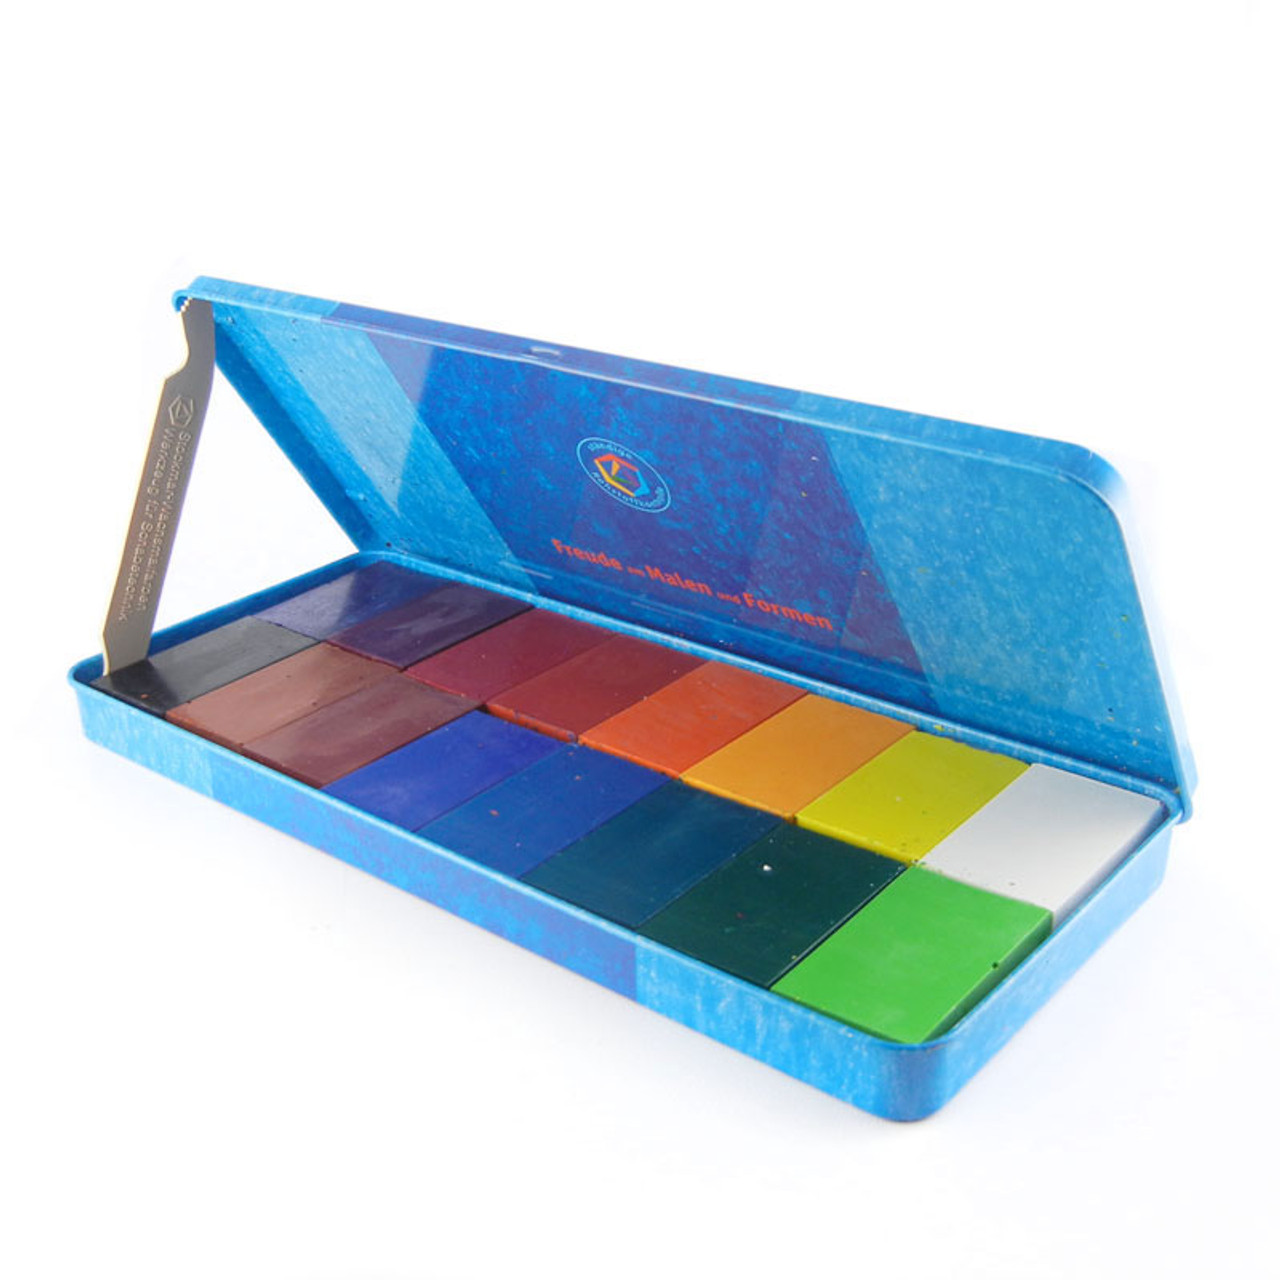 Stockmar Beeswax Crayons - 16 Colors, Block